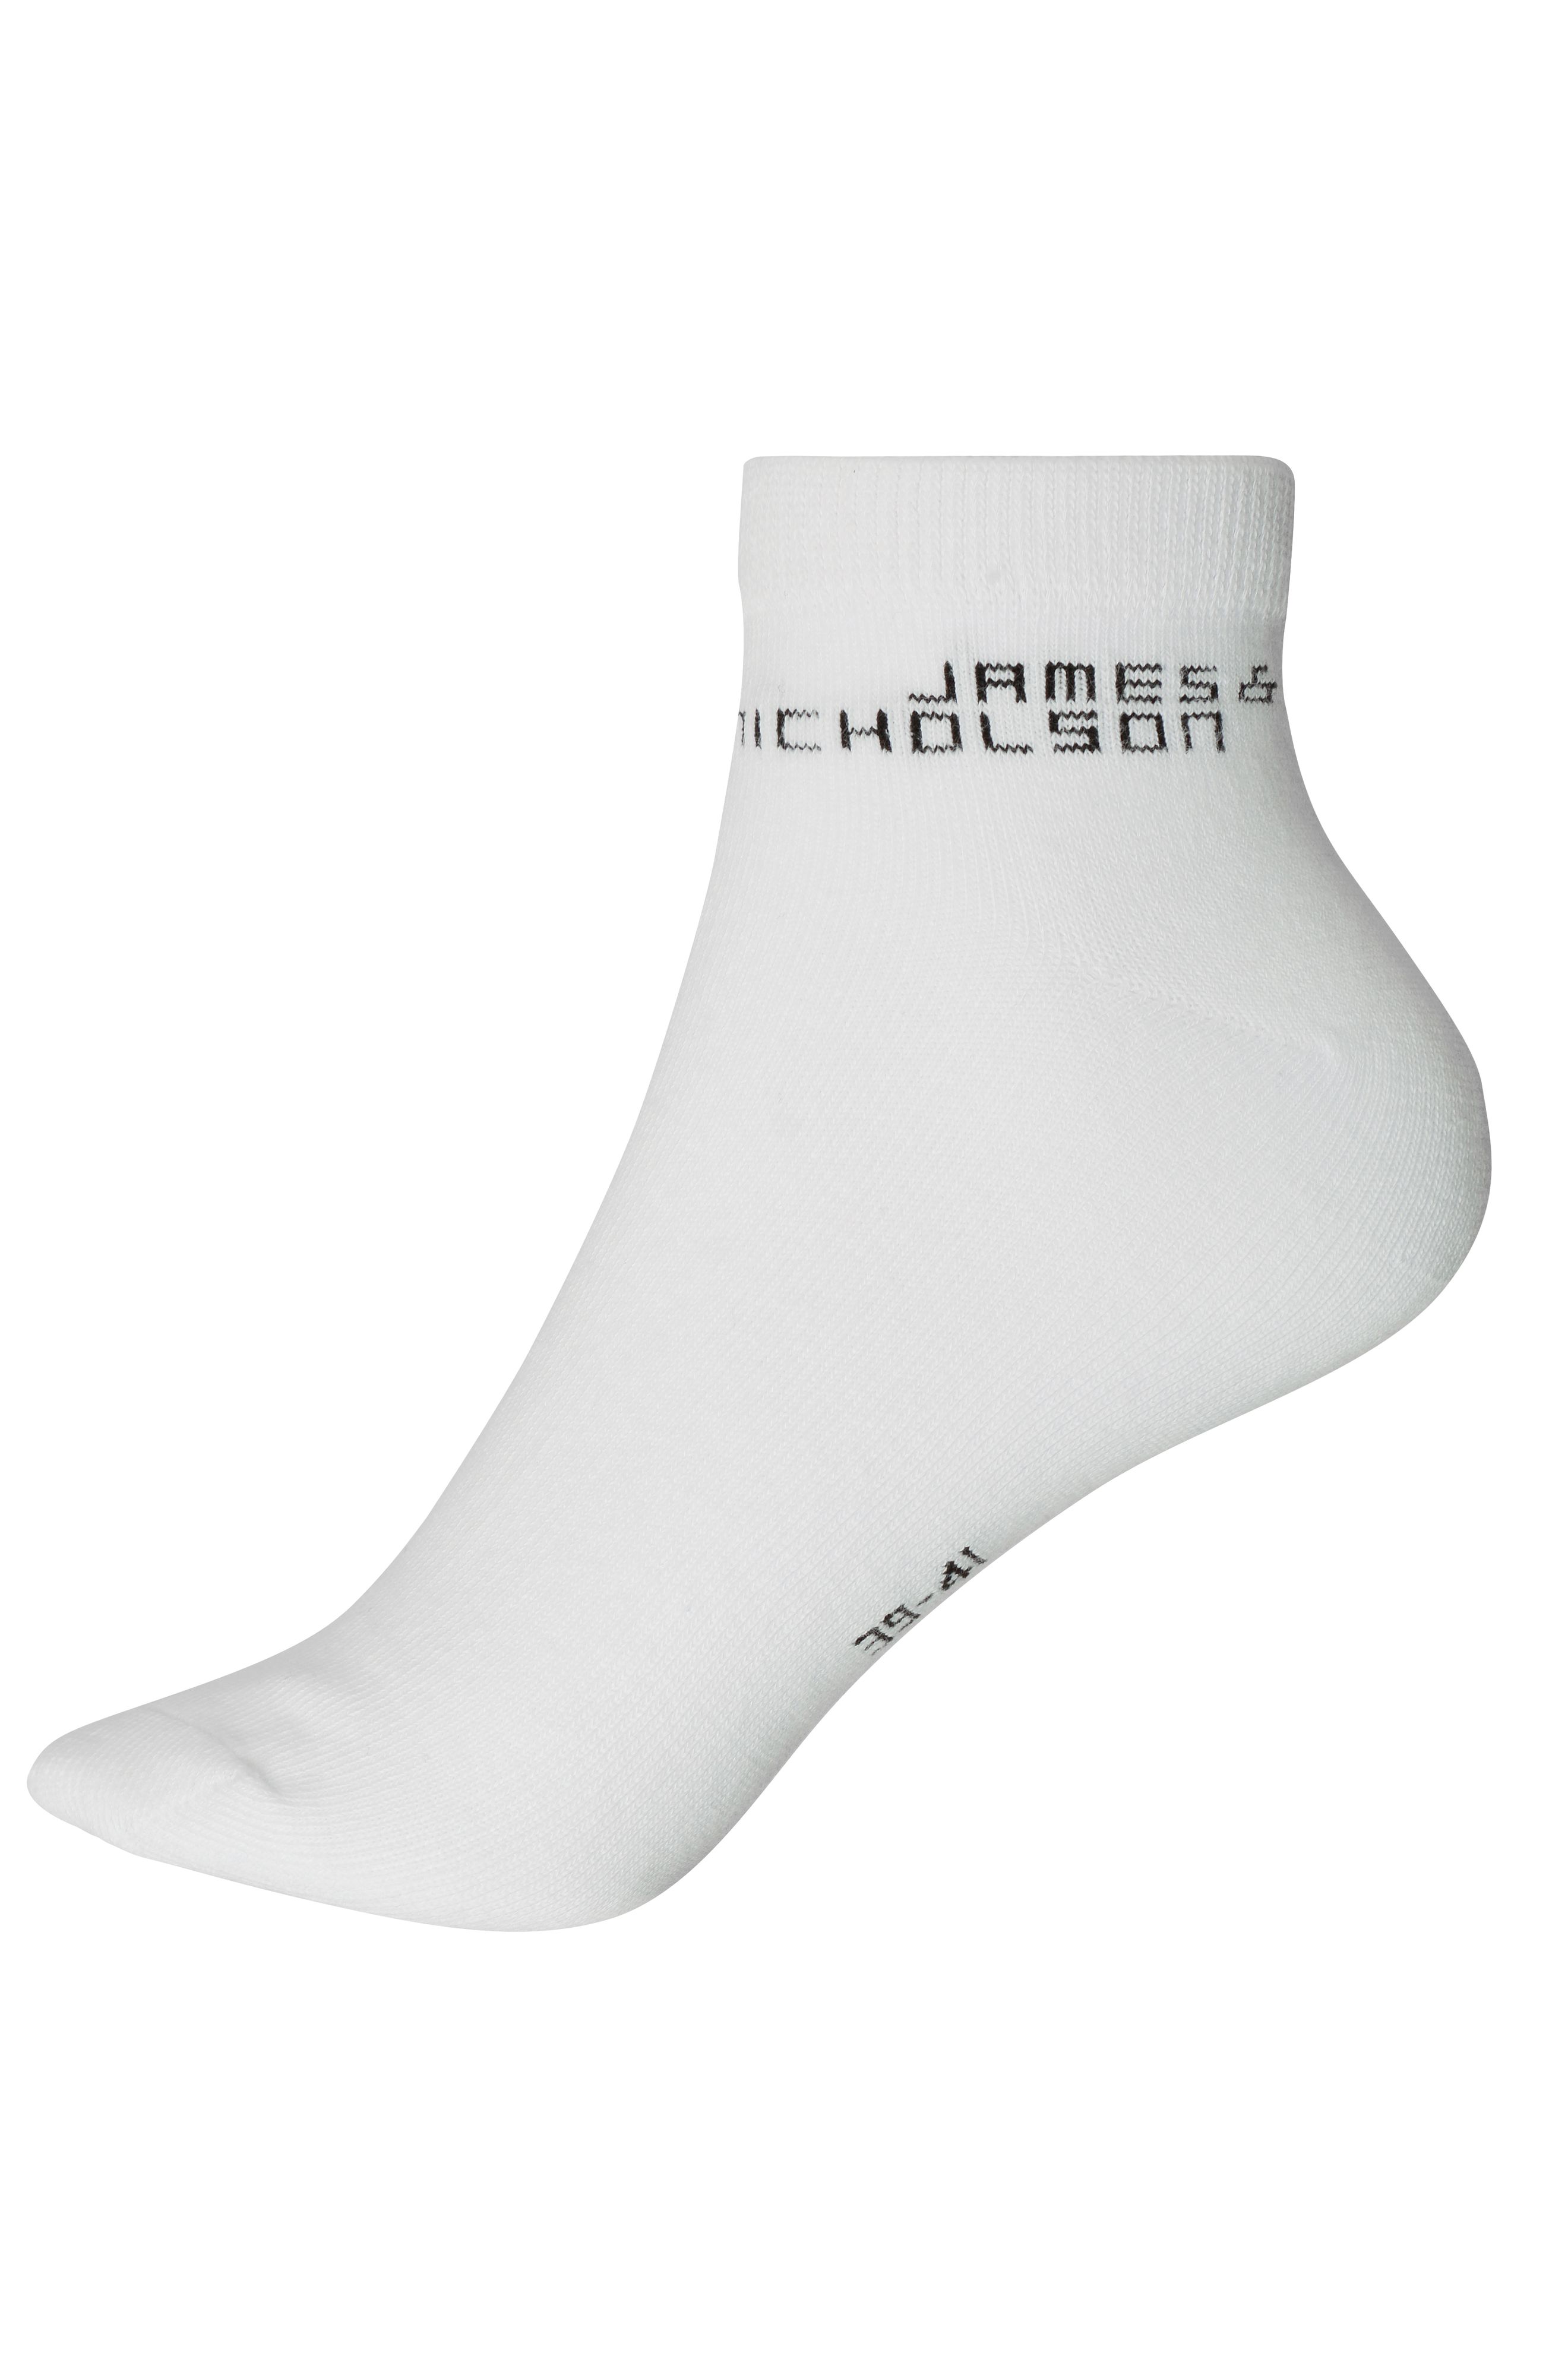 Bio Sneaker Socks 8031 Klassische, kurze Socke mit hohem BIO-Baumwollanteil